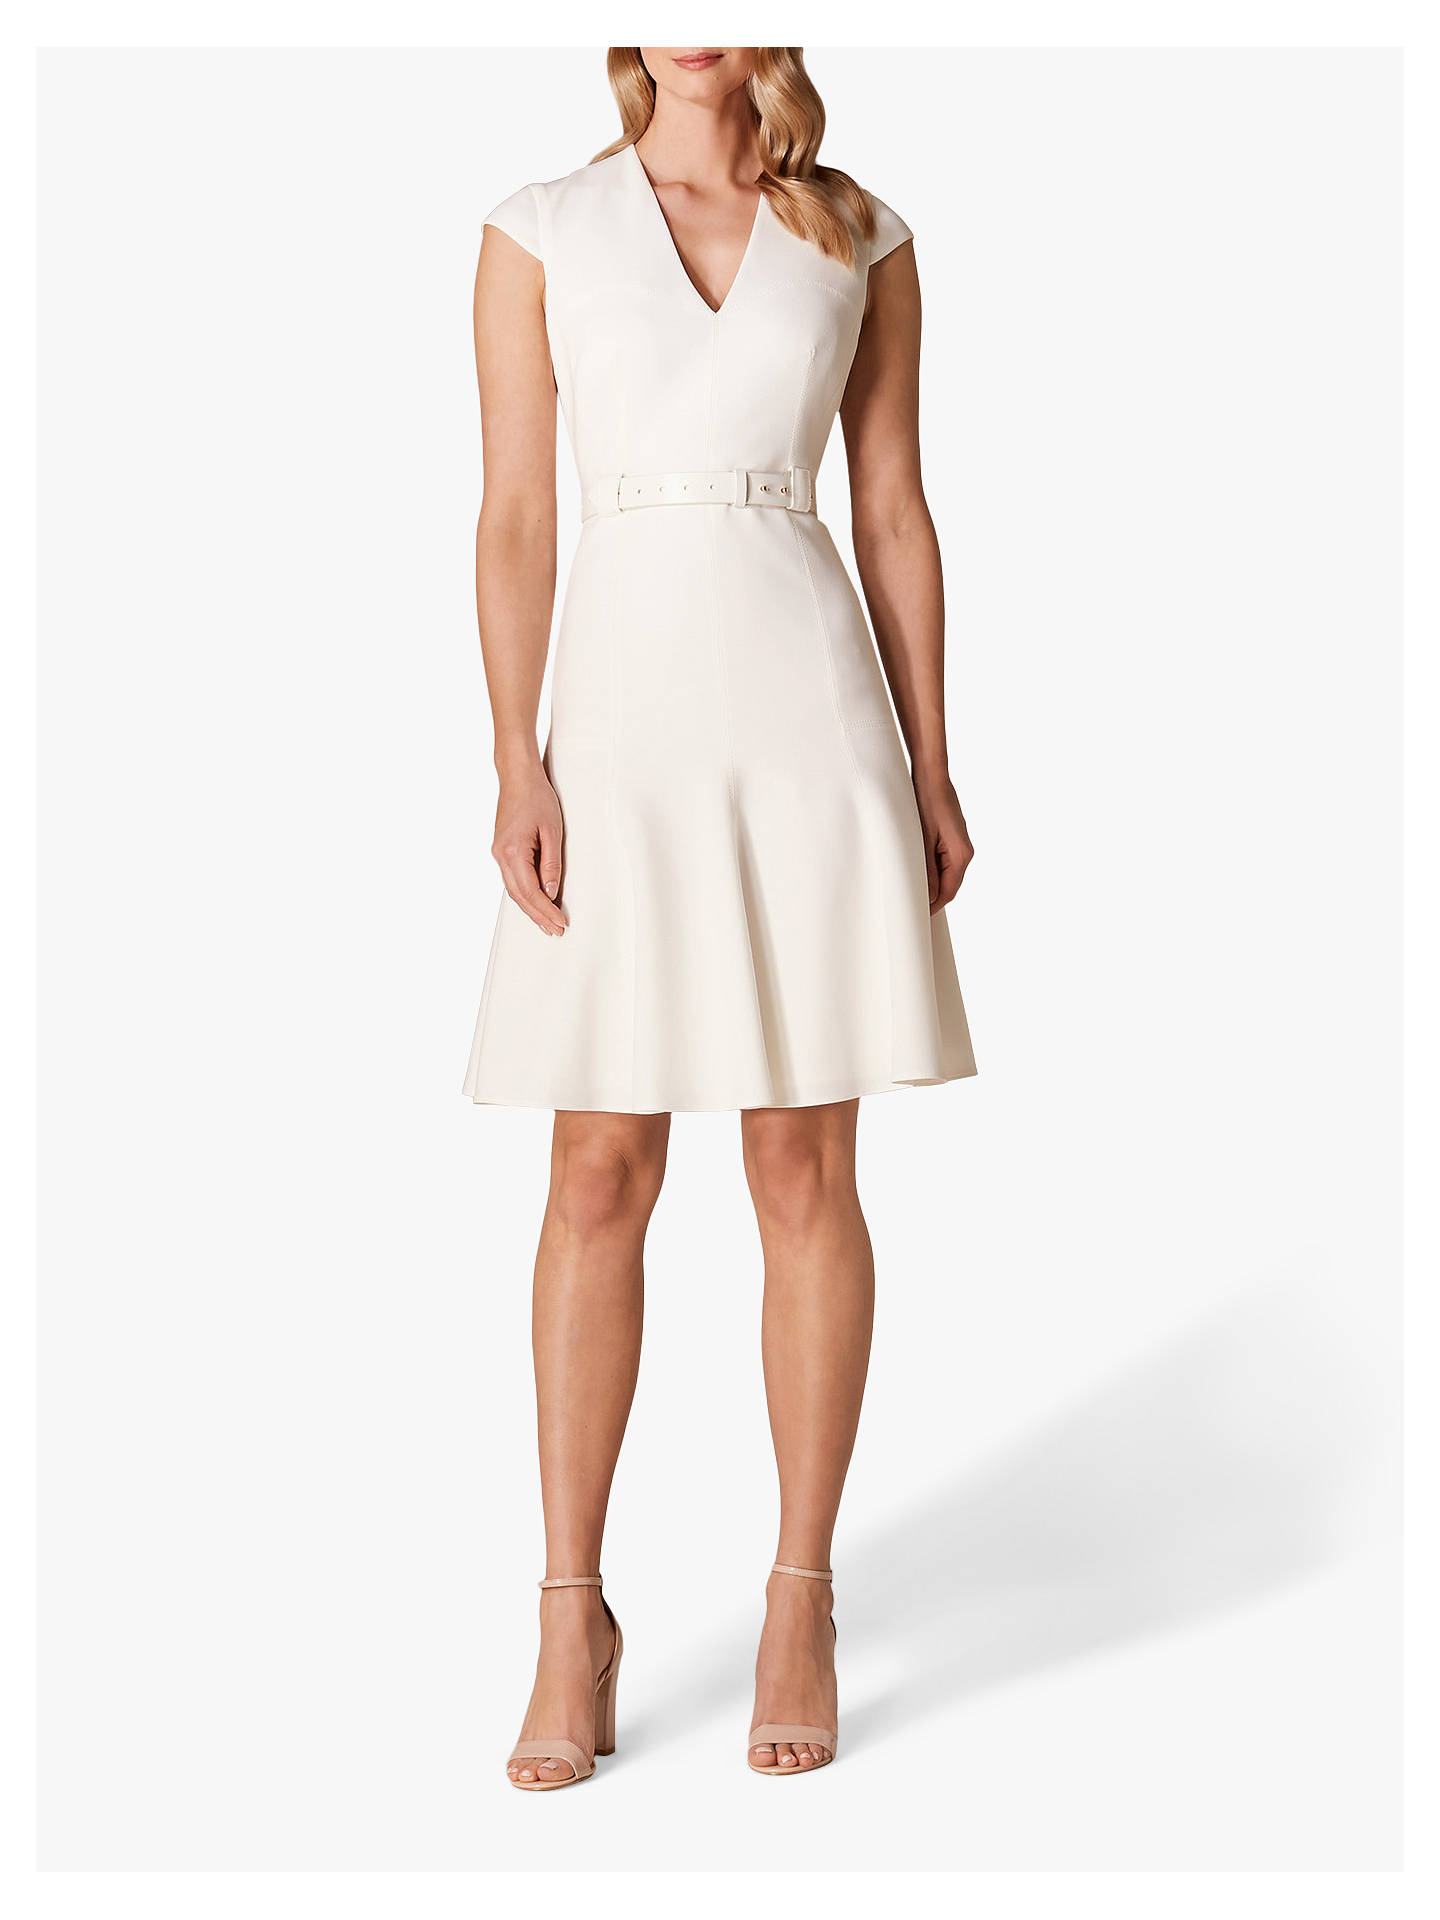 Karen Millen Pleat Hem Tailored Dress, Ivory at John Lewis & Partners